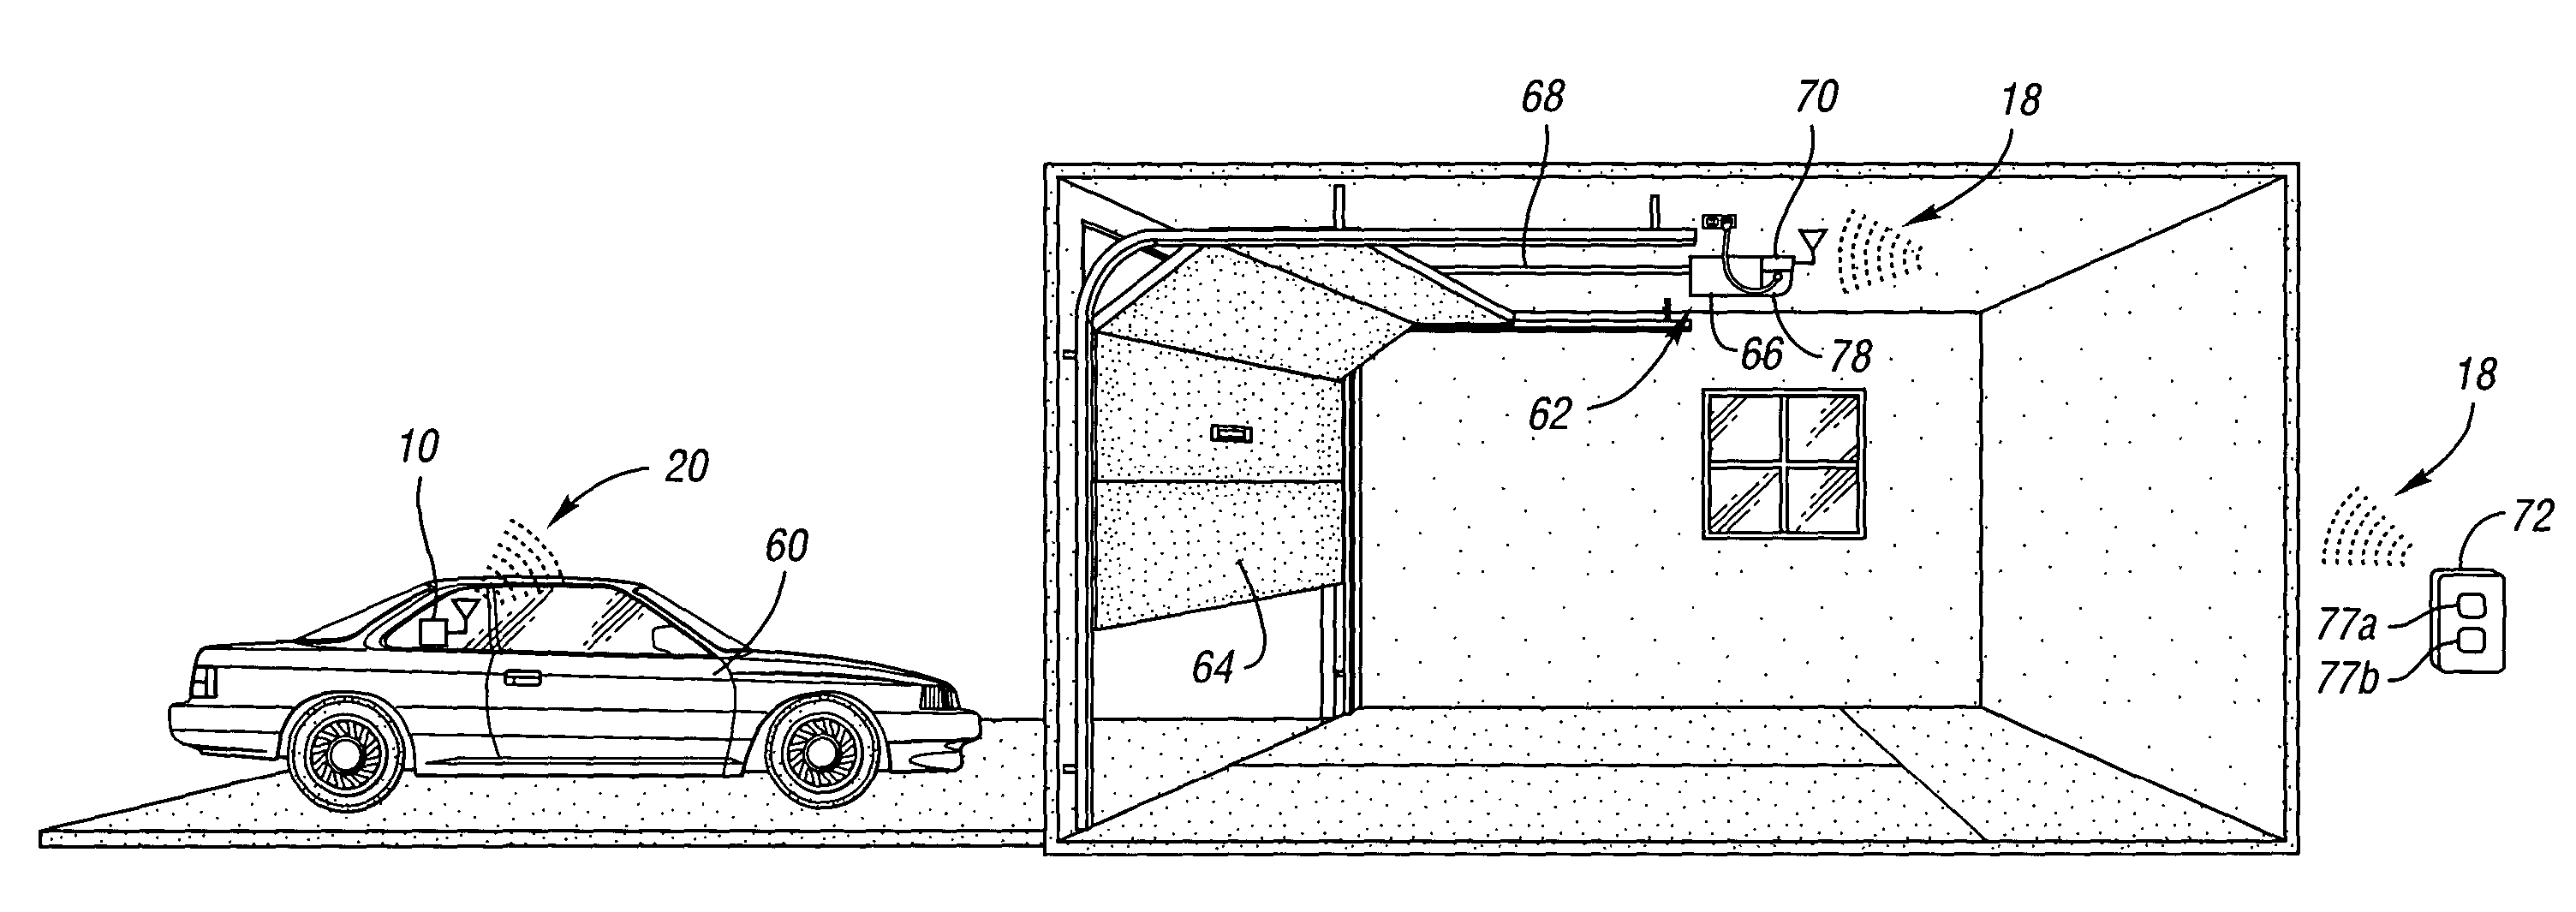 Universal vehicle based garage door opener control system and method